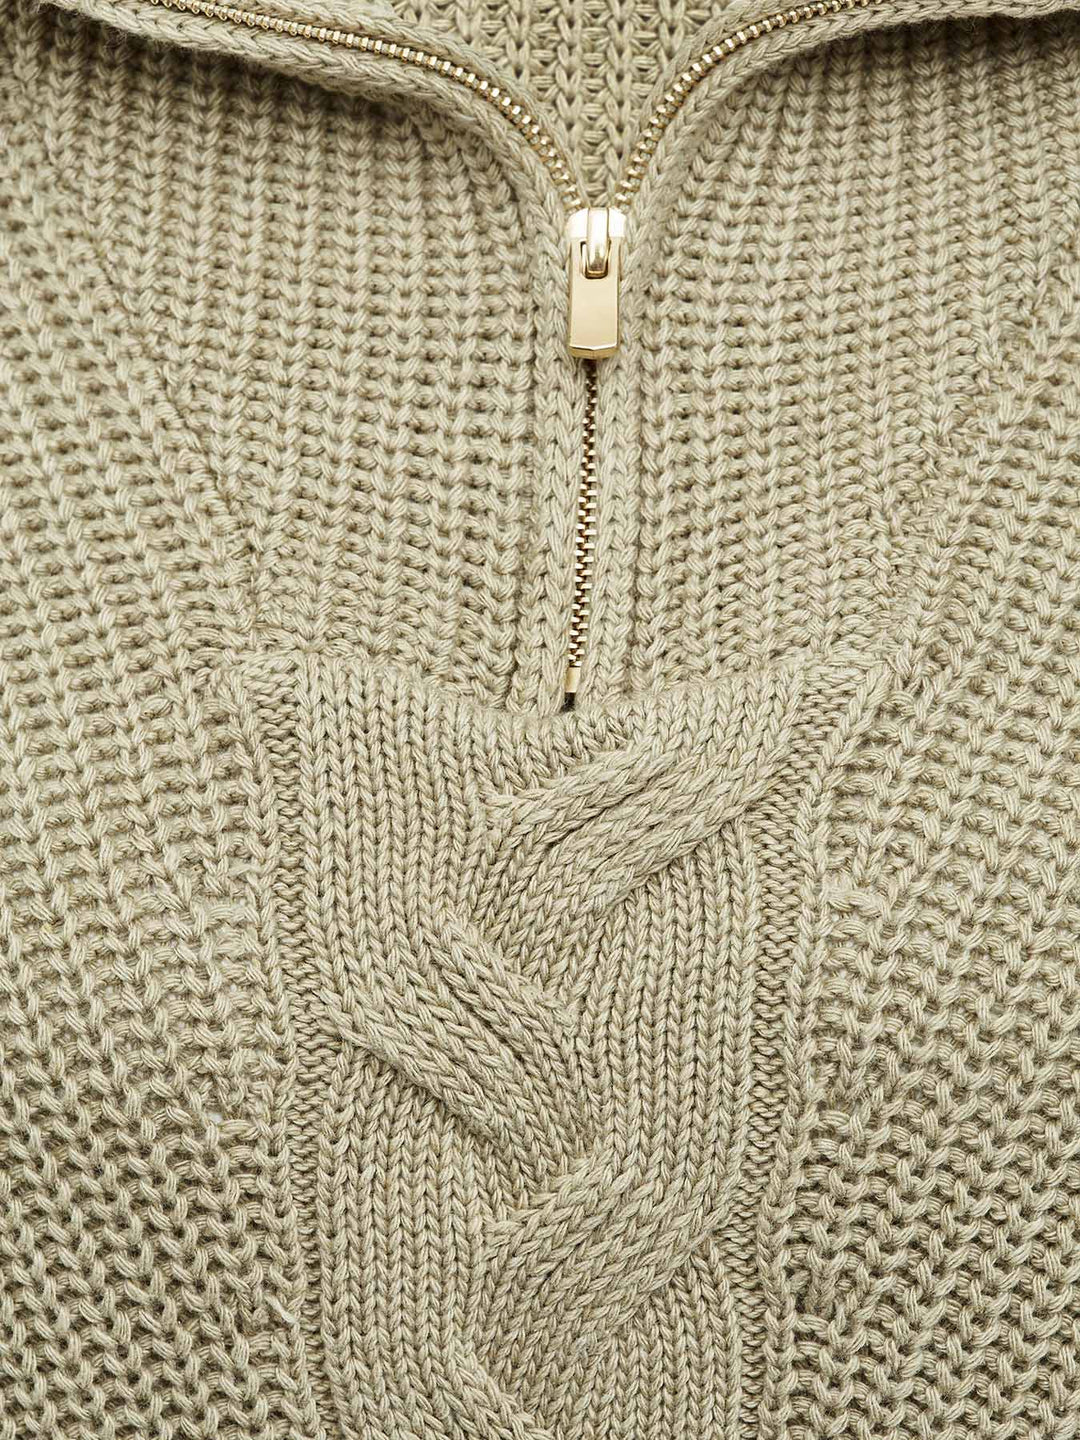 KNITTED - Half-Zip Sweater • Pistachio